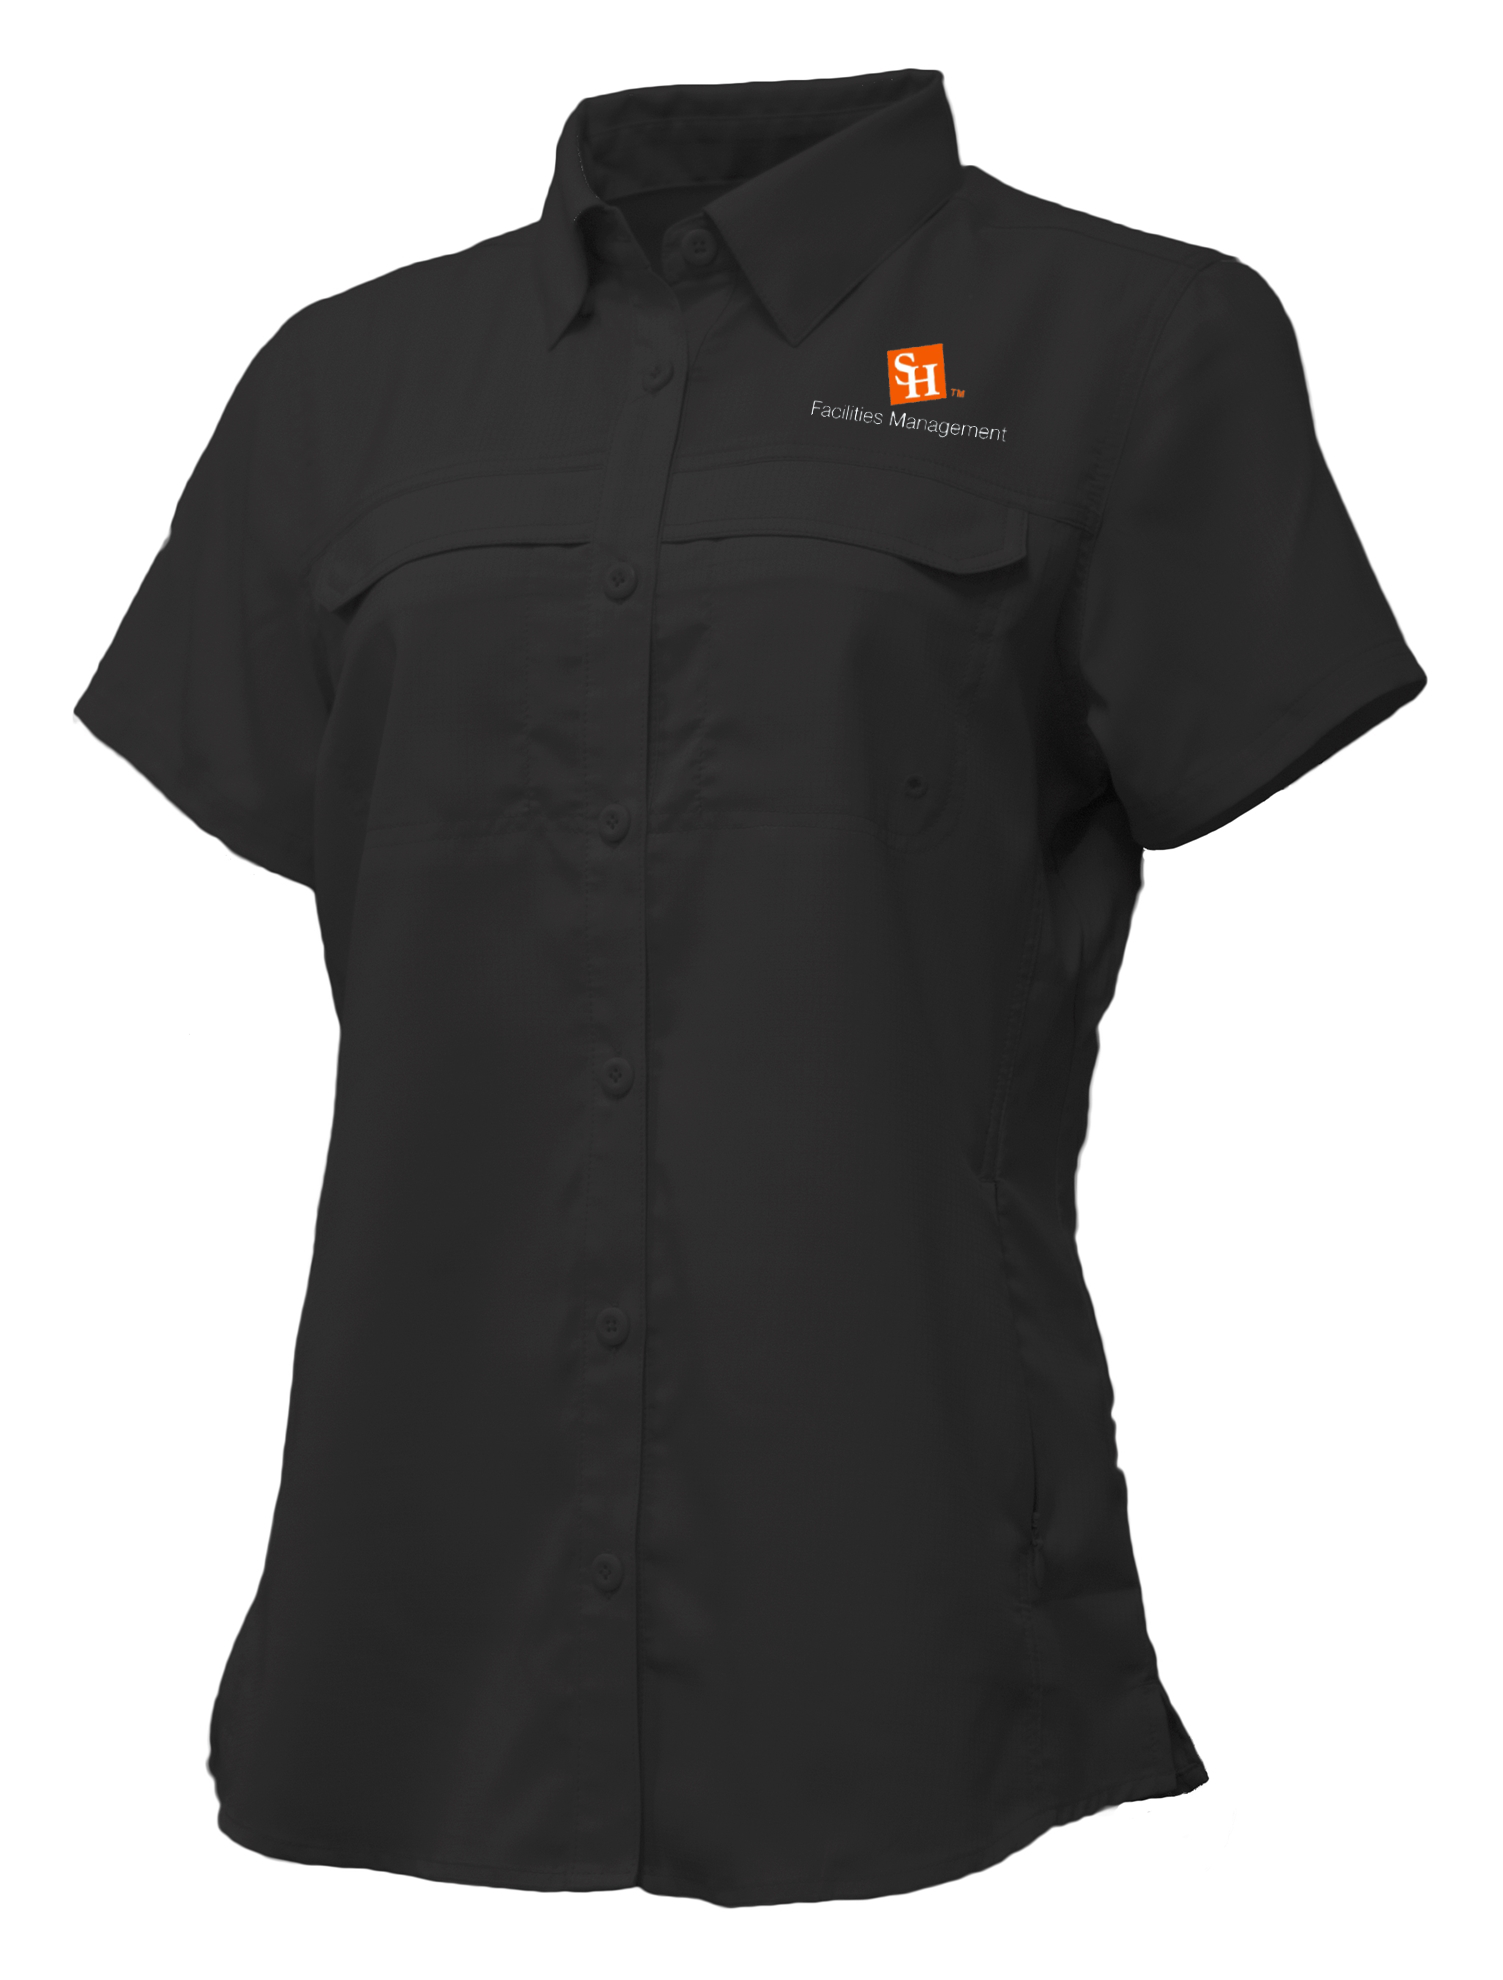 BAW Athletic Wear 3101 - Ladies Short Sleeve Fishing Shirt